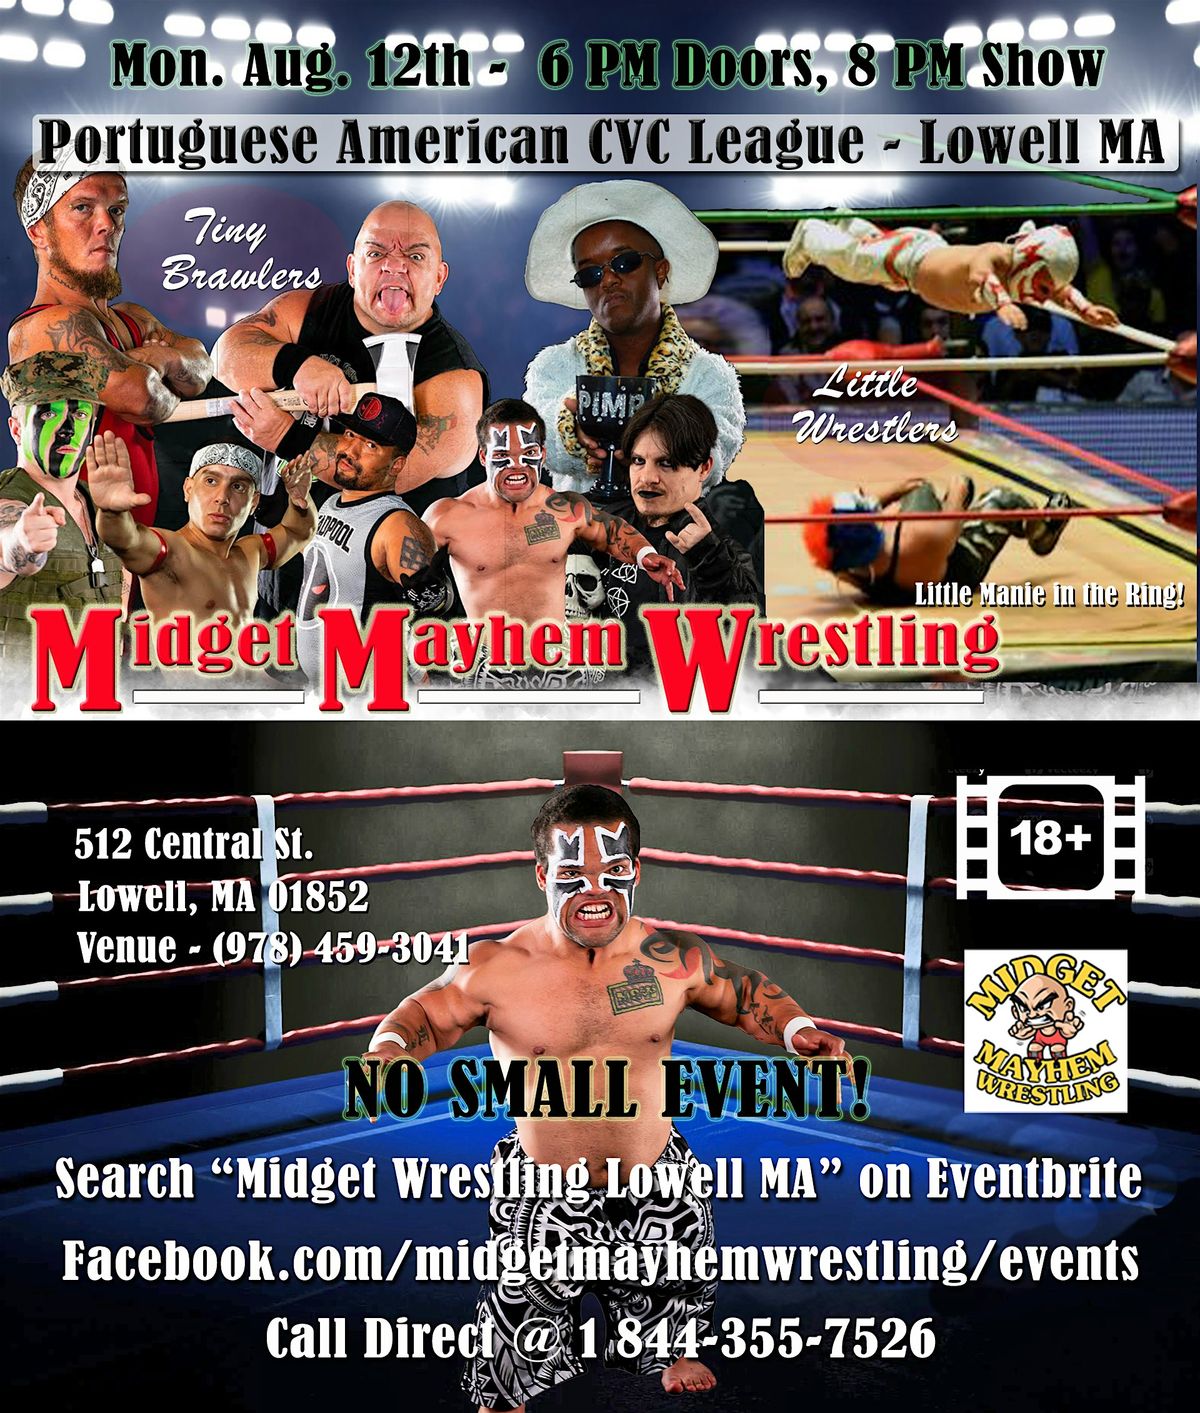 Midget Mayhem Wrestling Goes Wild!  Lowell MA (18+)